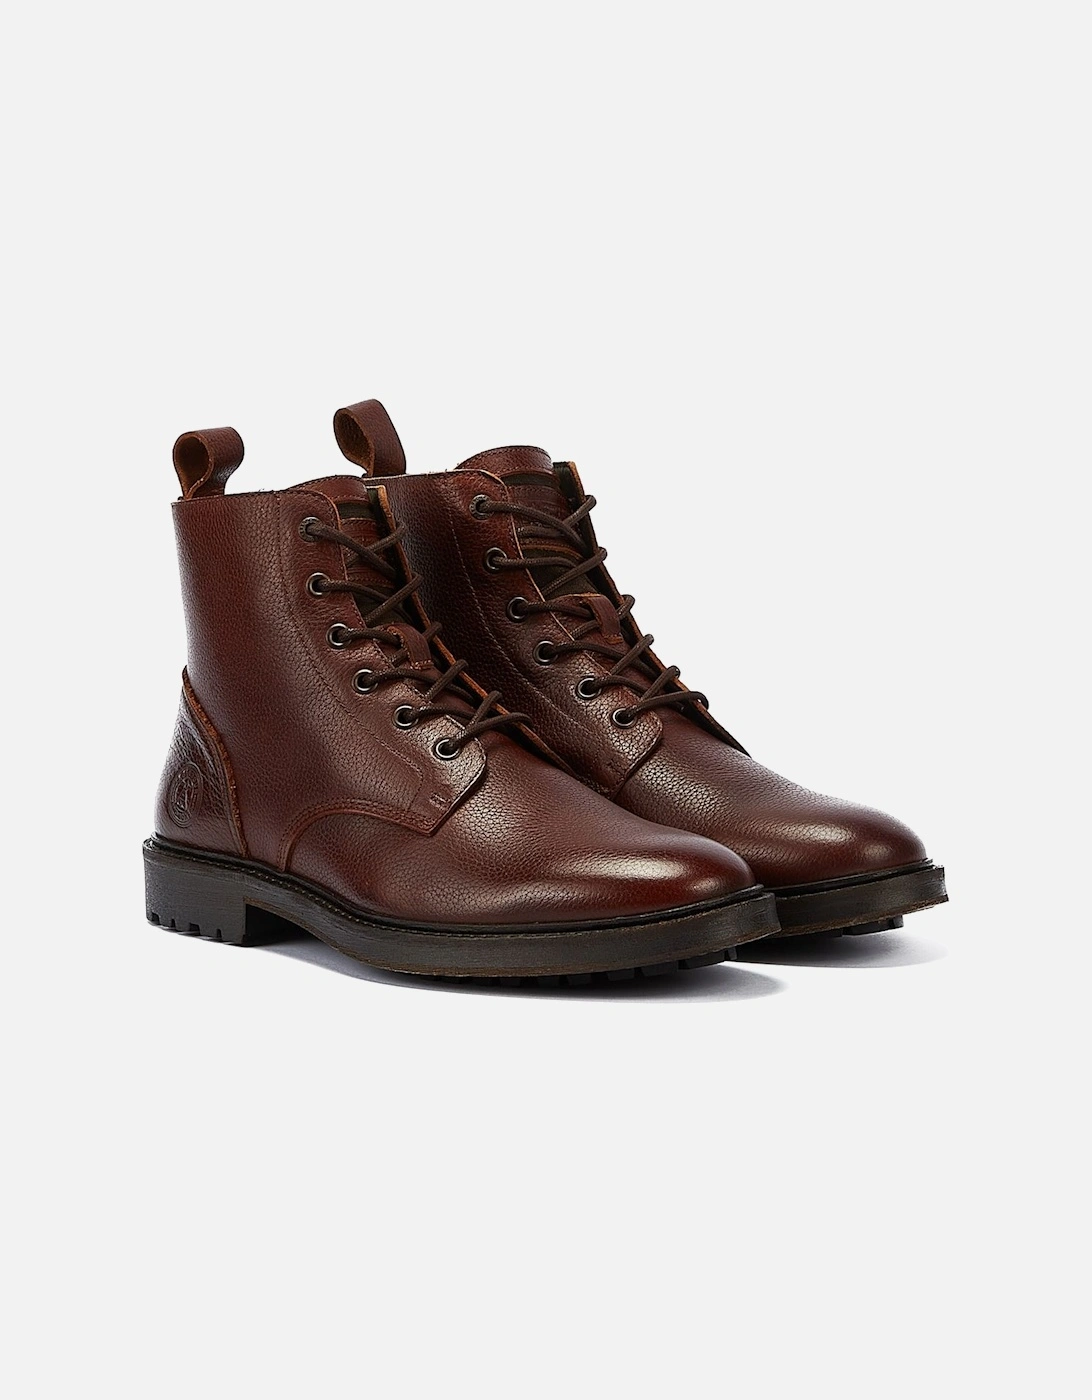 Heyford Men's Chestnut Boots, 9 of 8